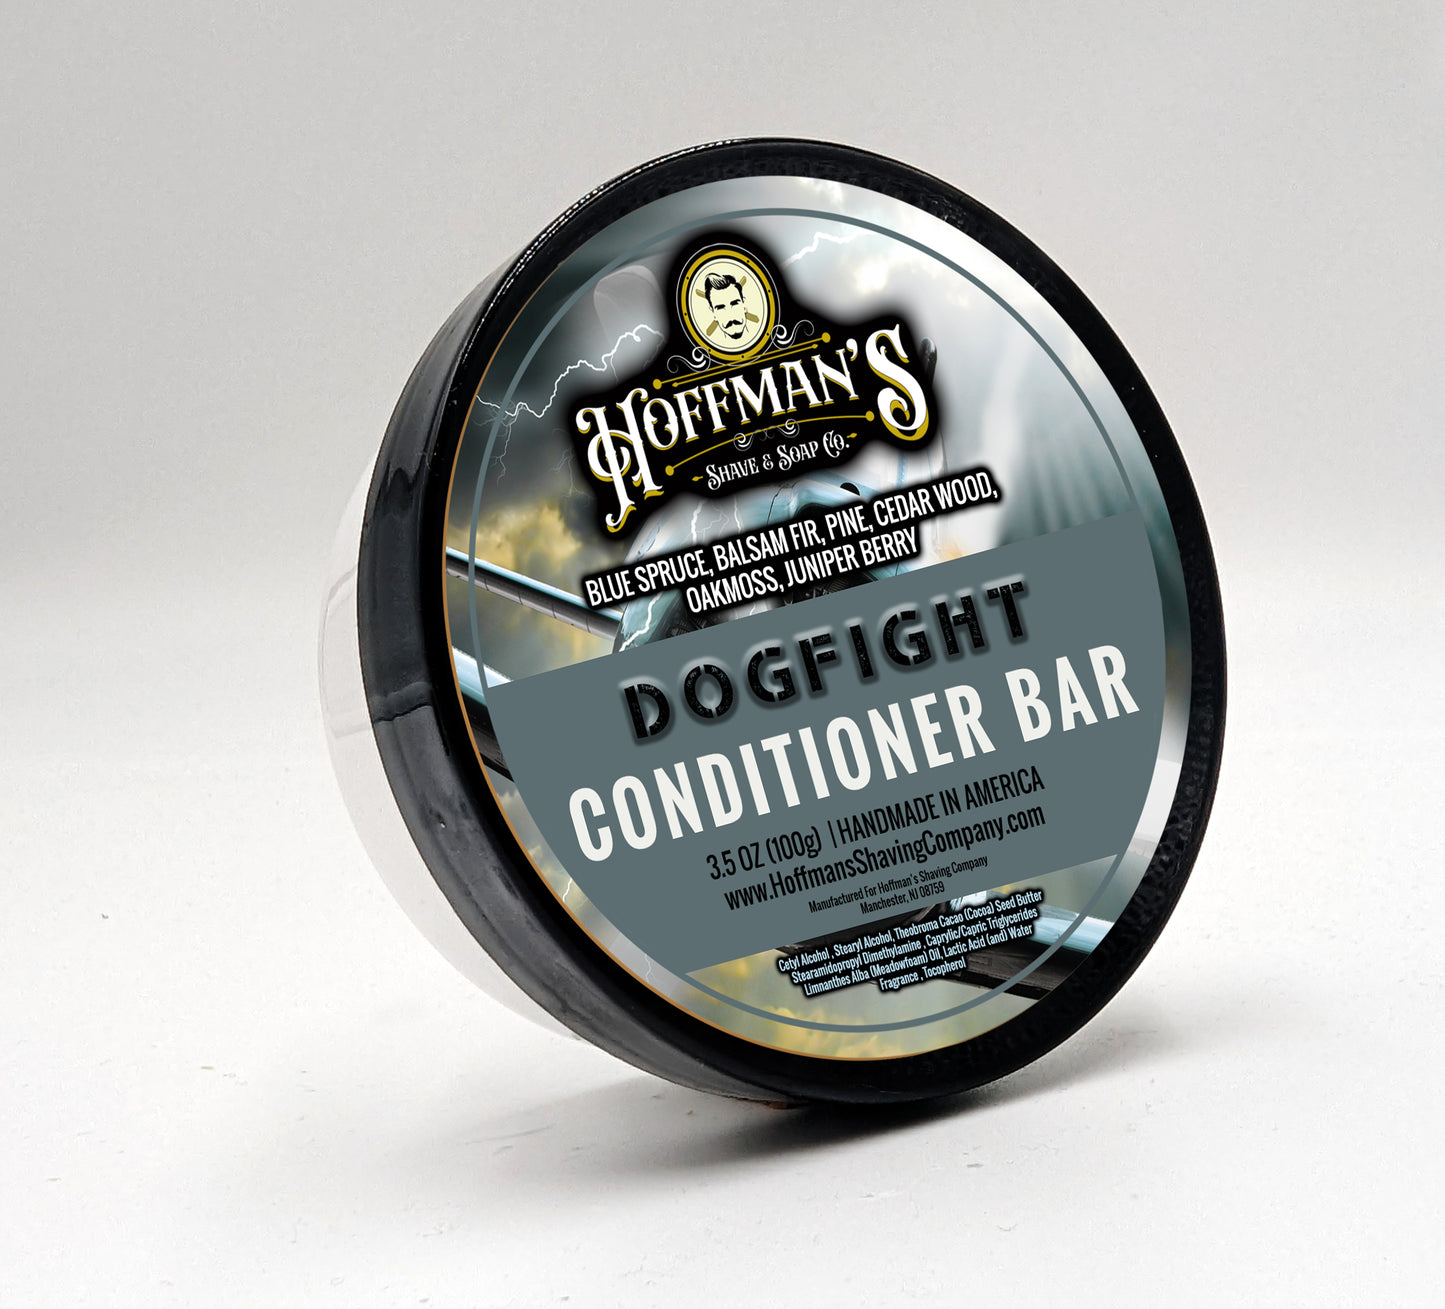 Dogfight Conditioner Bar 3.5 oz